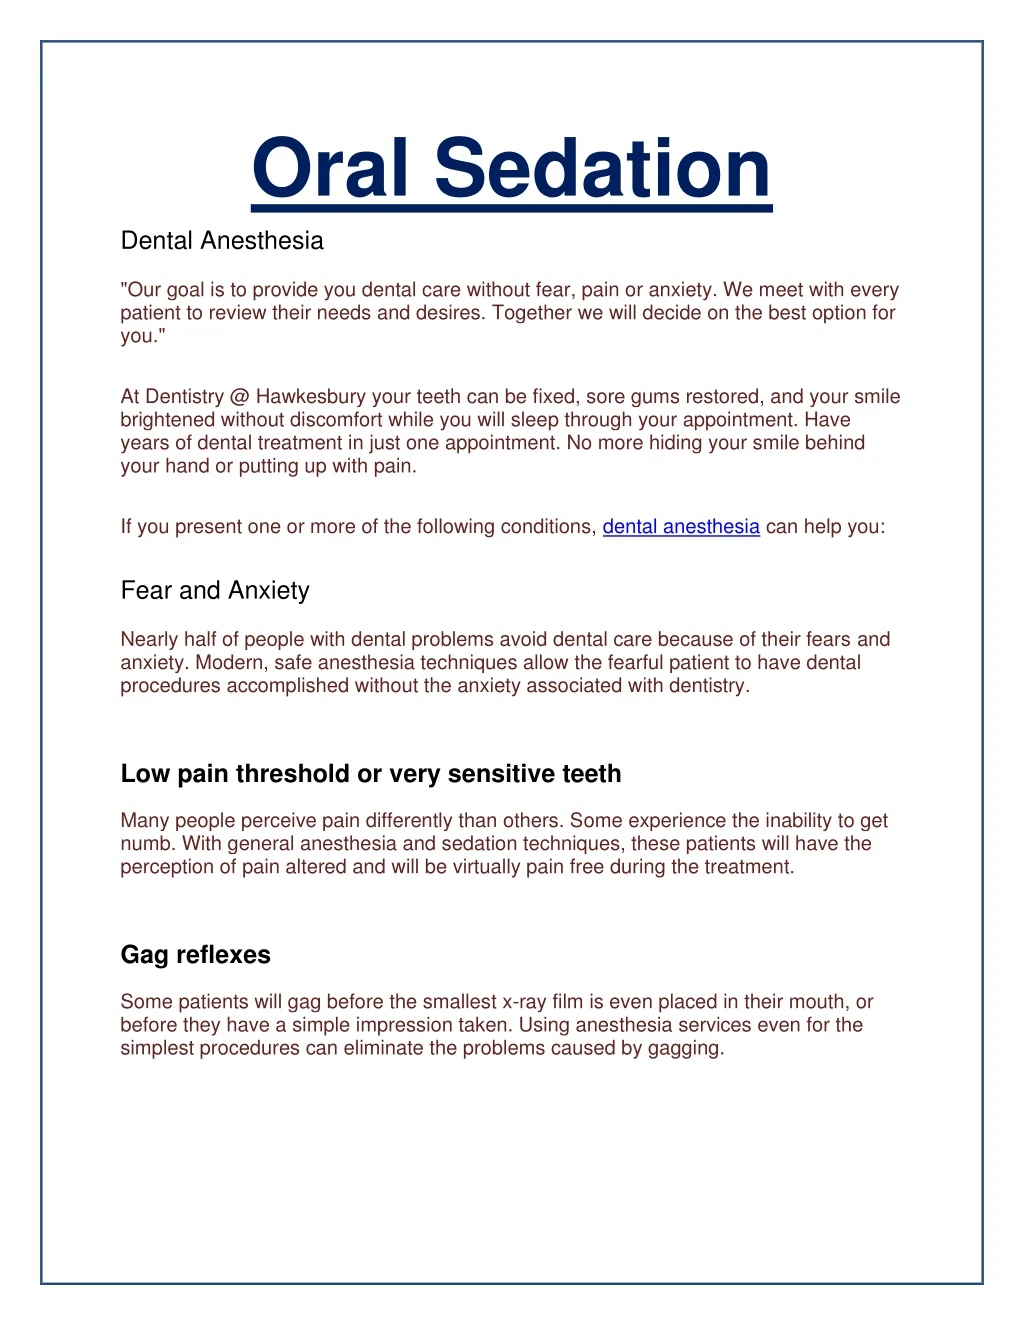 oral sedation dental anesthesia